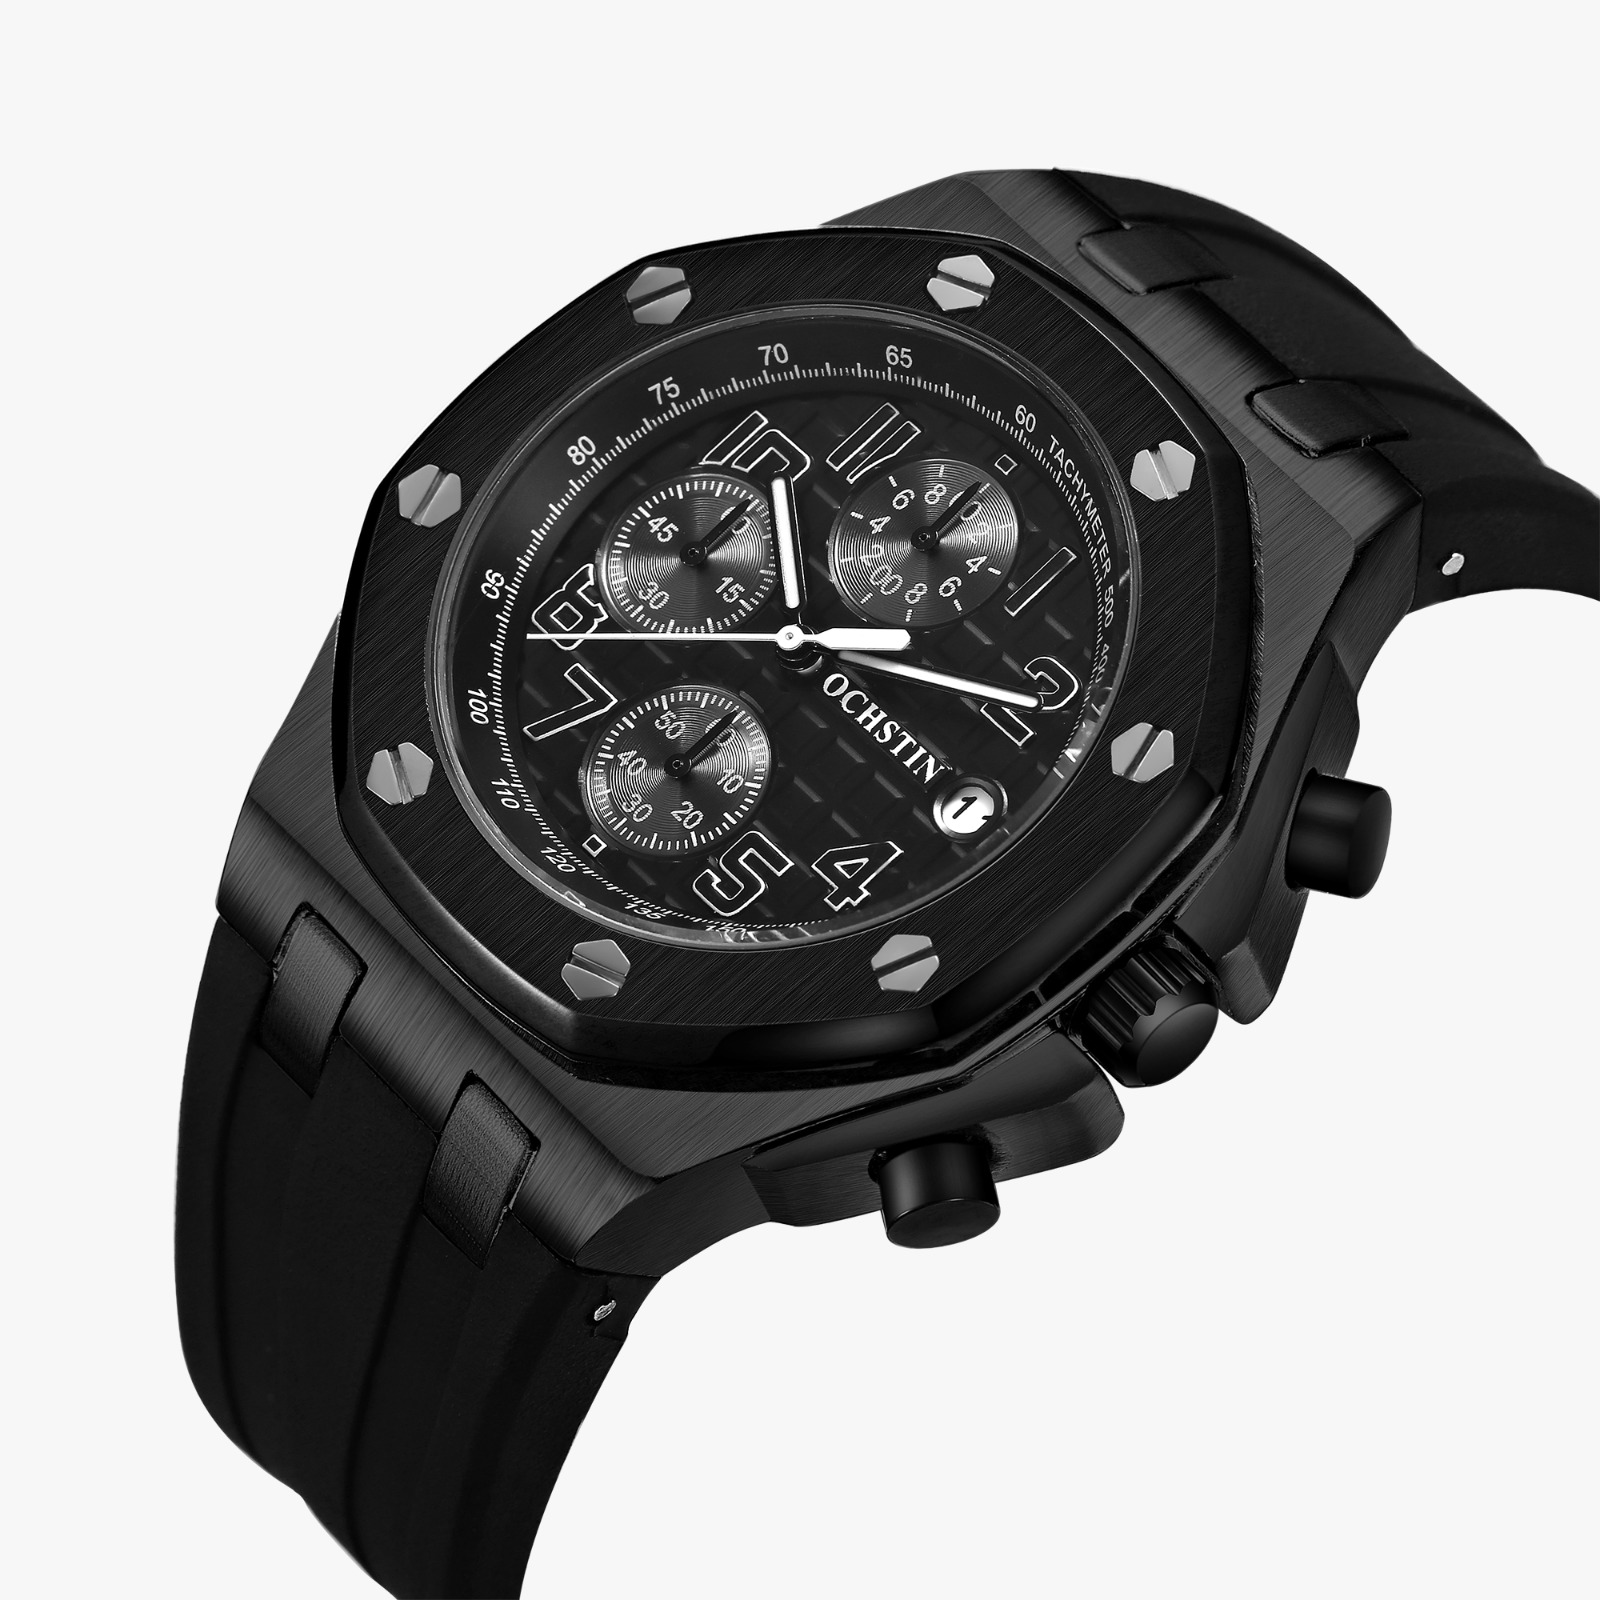 OCHSTIN BLACK Analog Quartz Watch Men Male Casual Fashion Sport Wristwatch Genuine Leather Strap Band Business Wrist Men Watch 6100